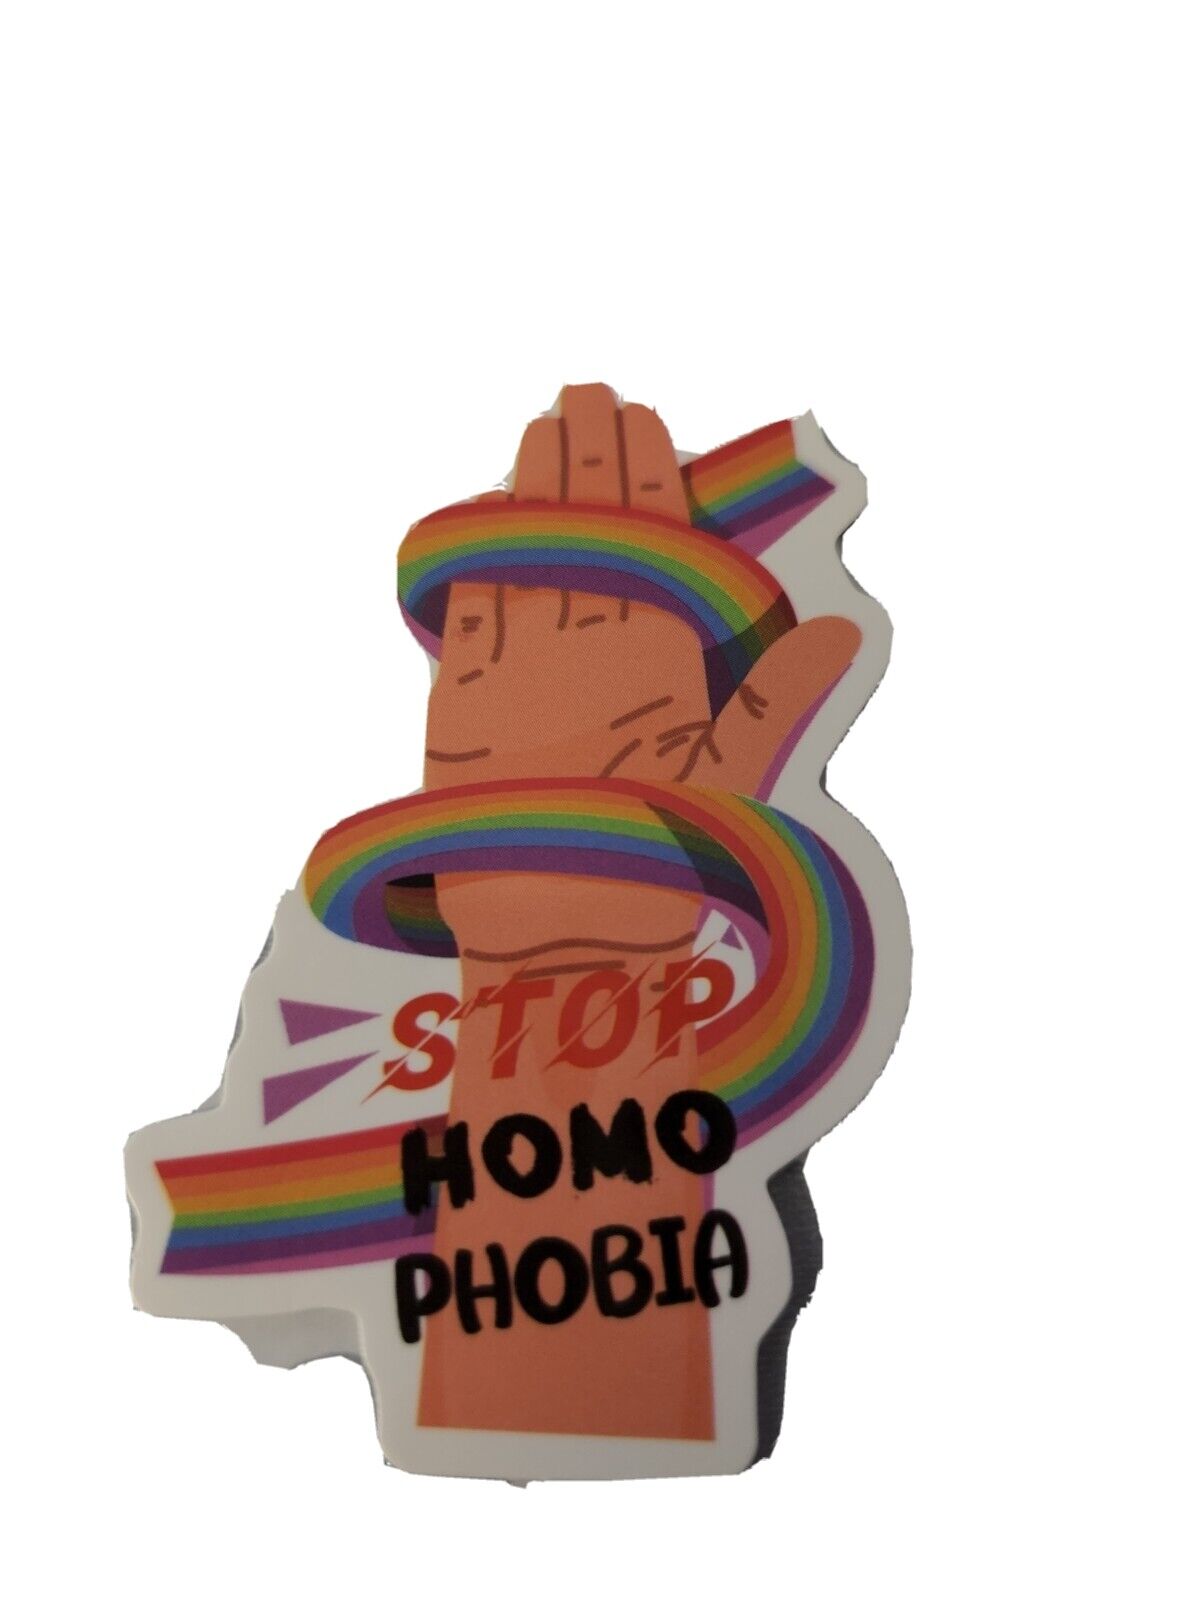 Stop homophobia LGBT sticker decal 2x2